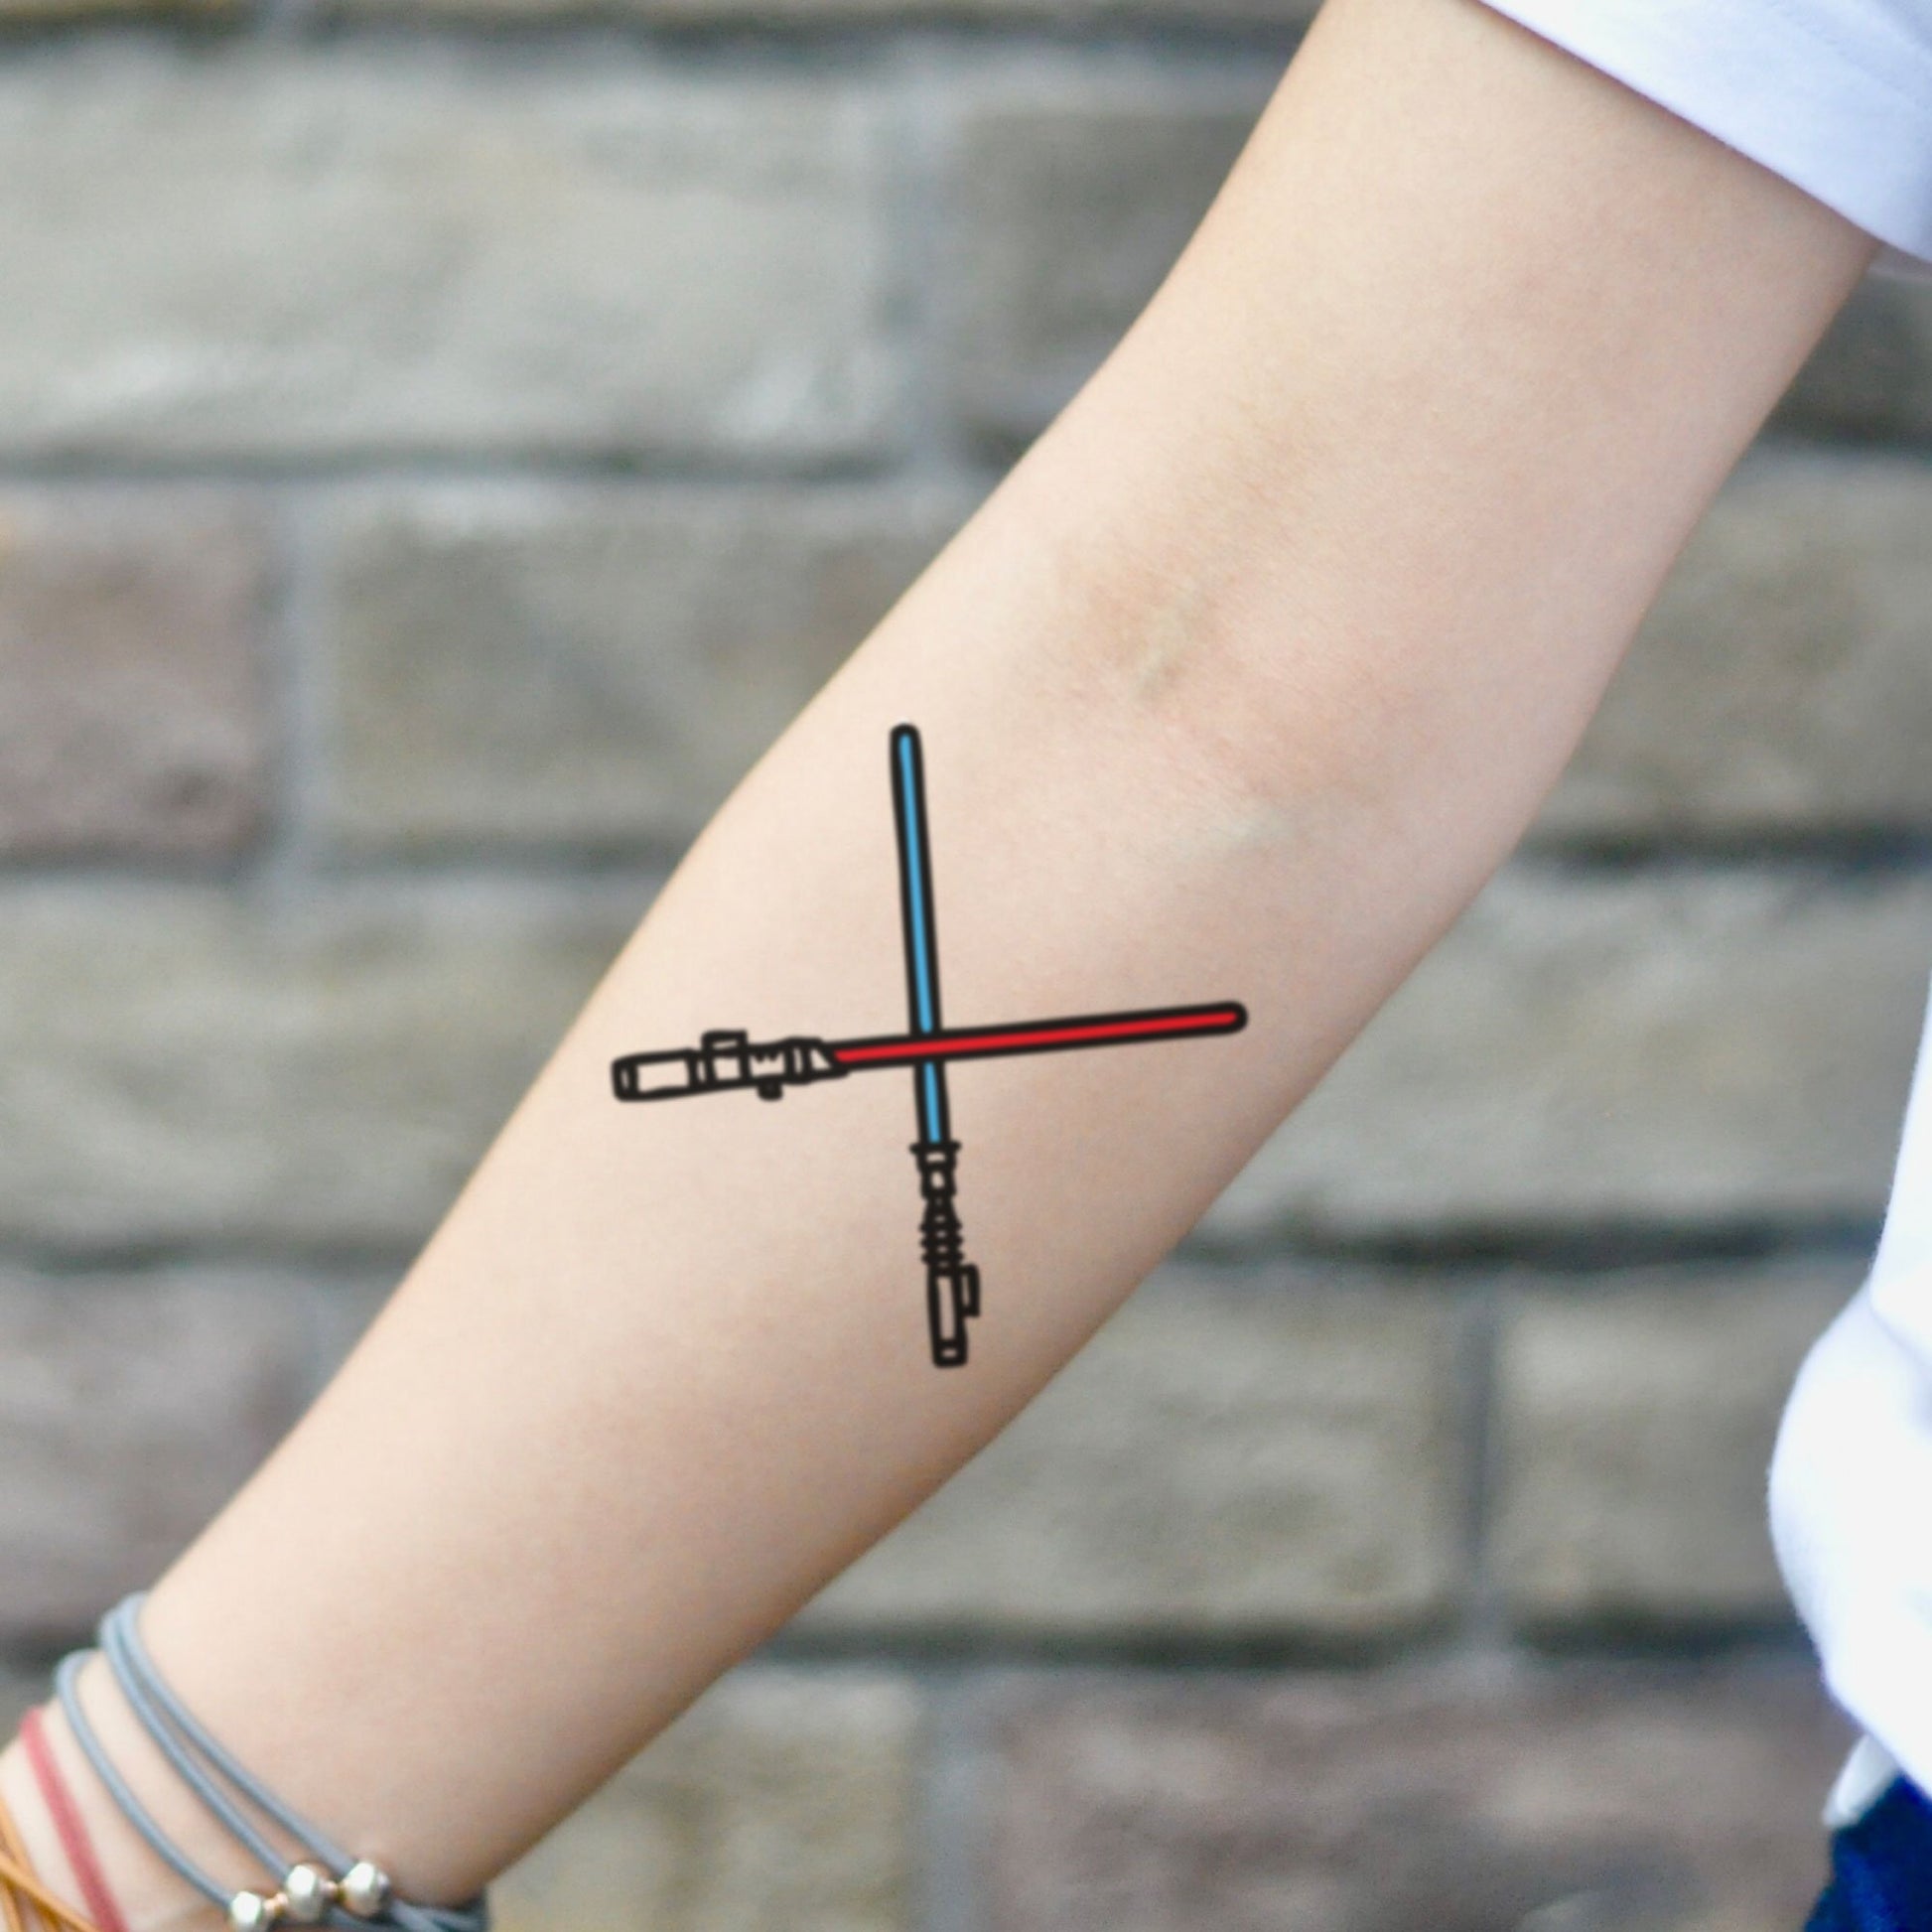 fake small star wars lightsaber color temporary tattoo sticker design idea on inner arm